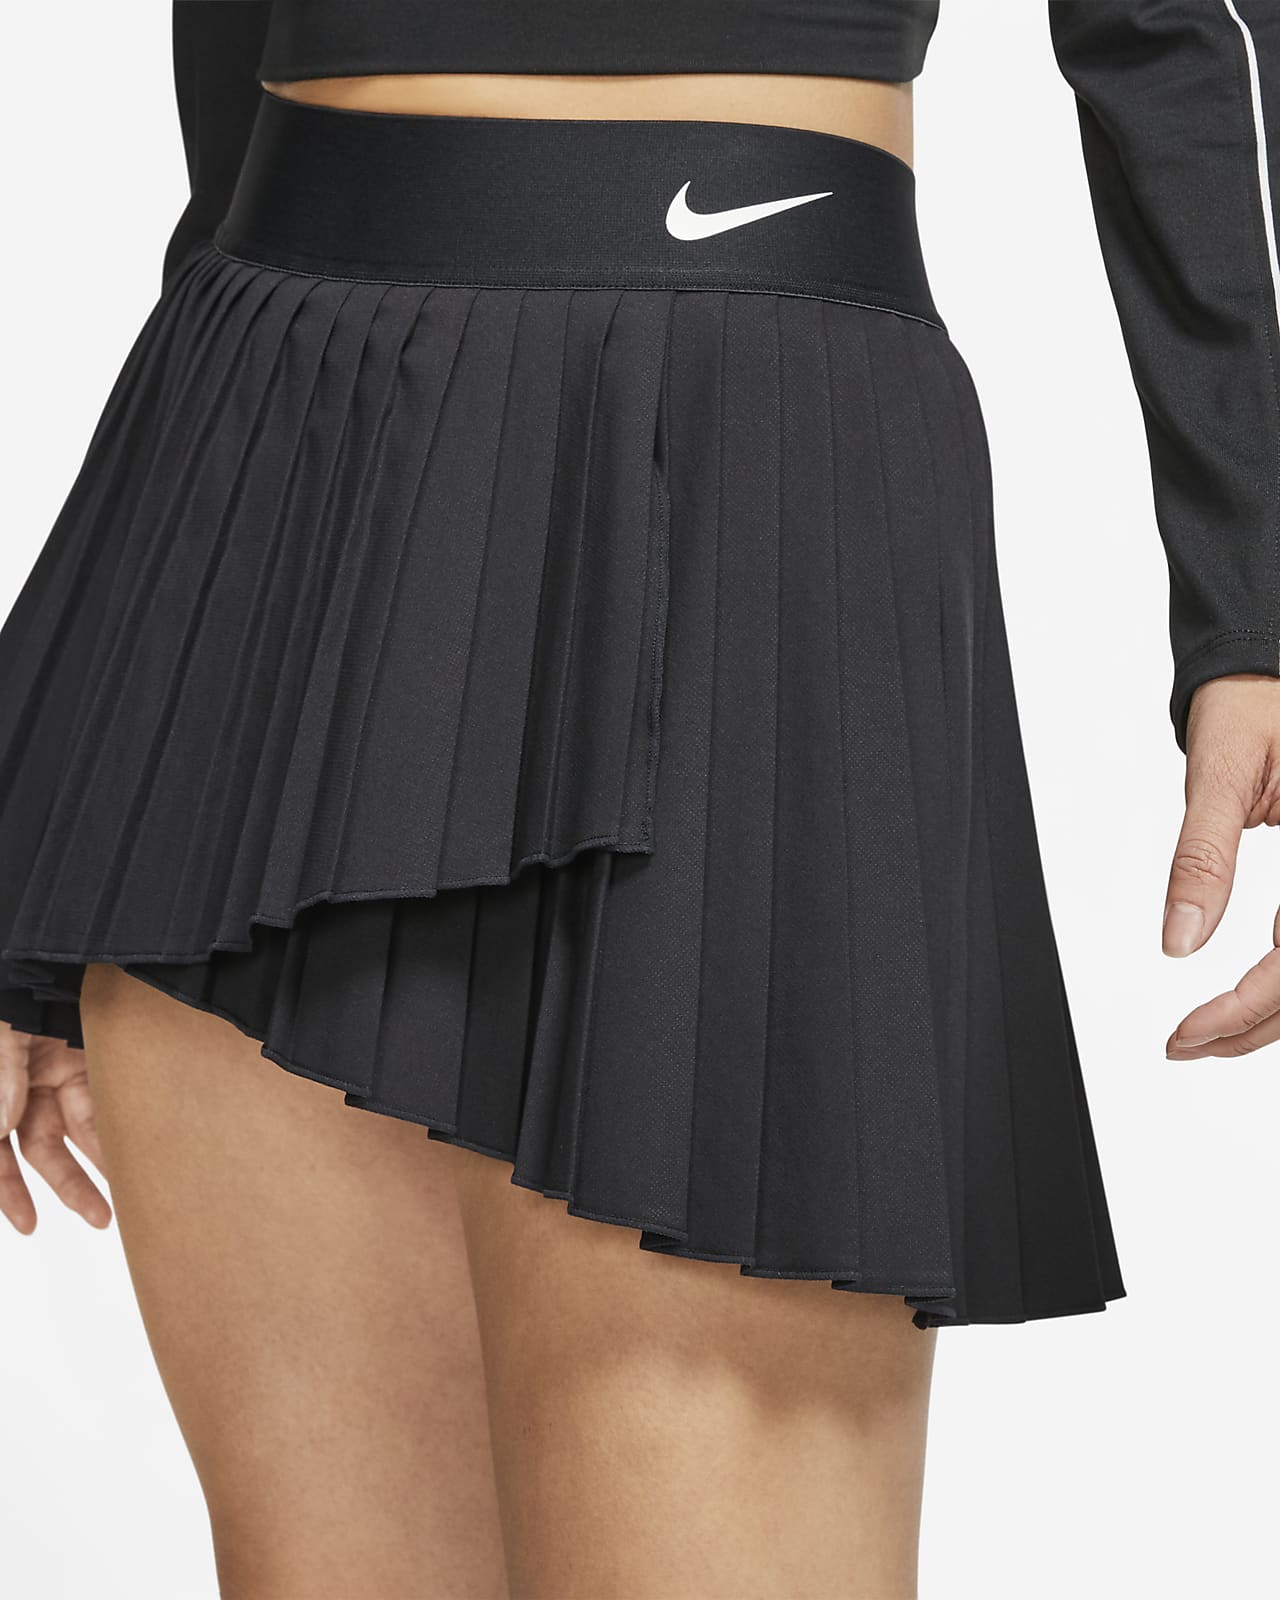 nike women's court victory tennis skirt